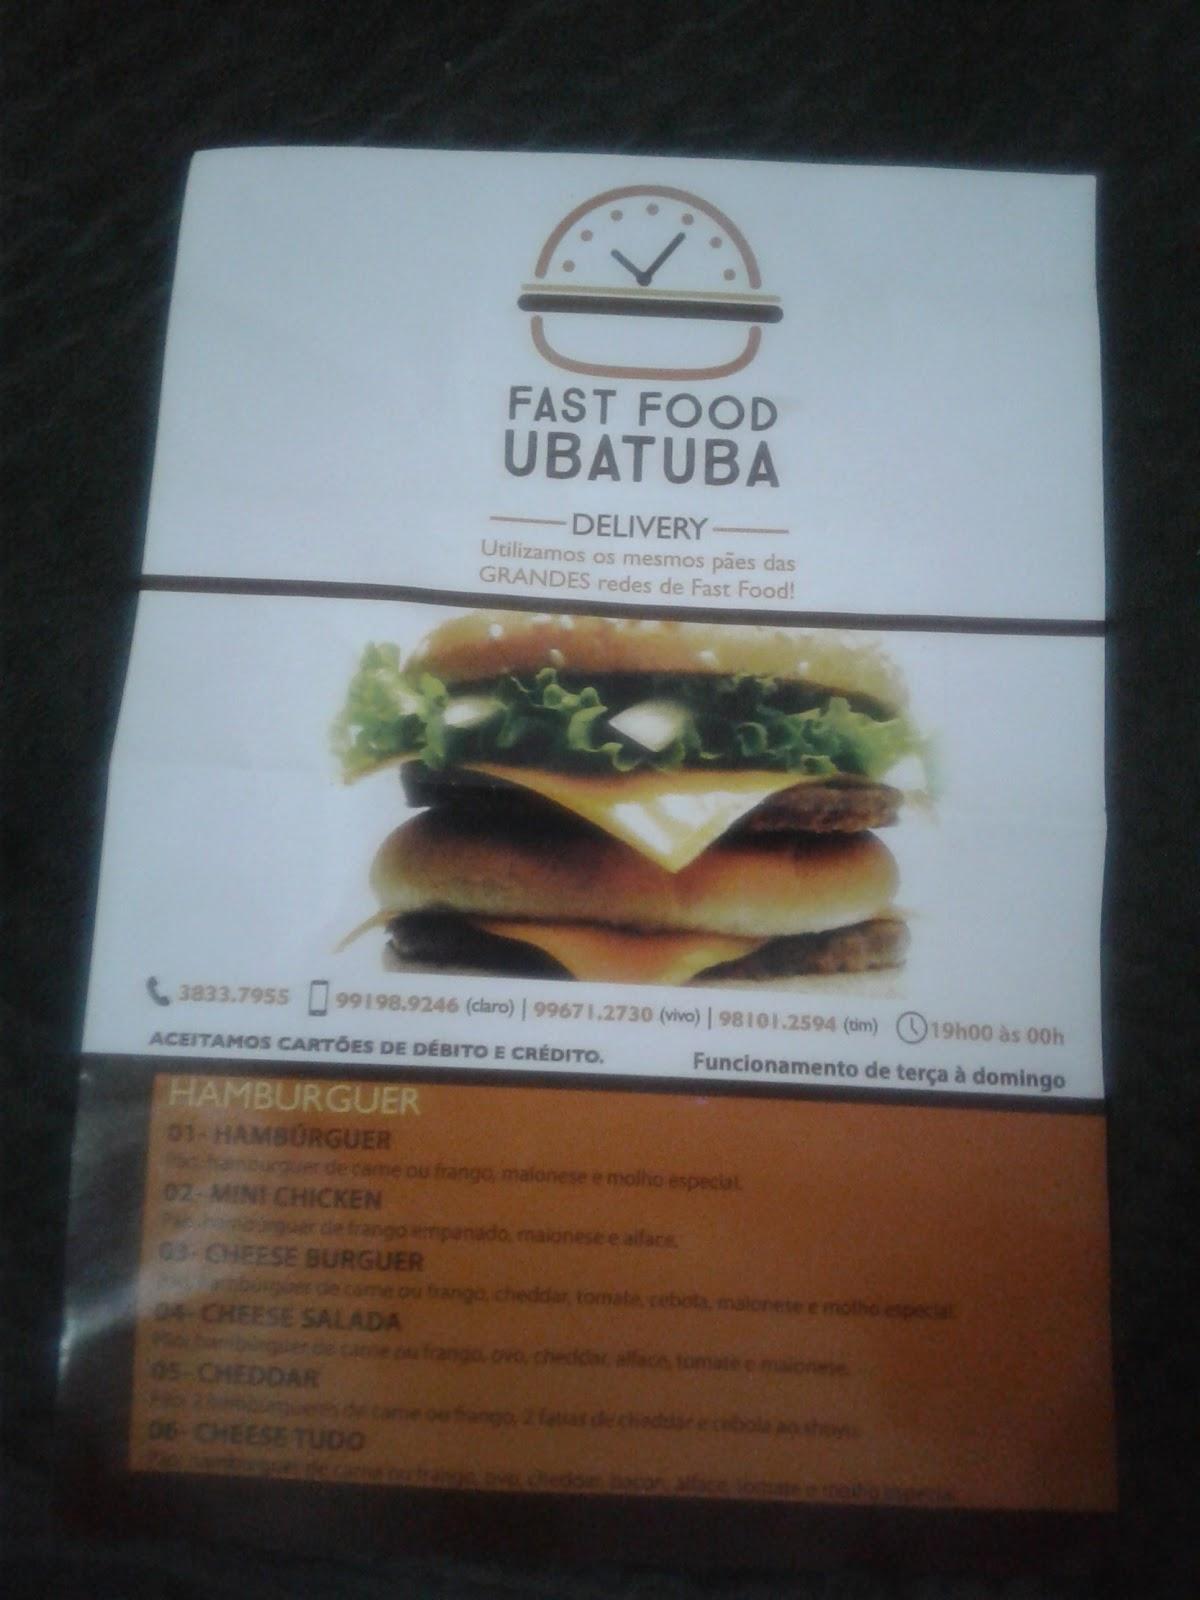 O melhor fast food: Ubatuba - Tripadvisor